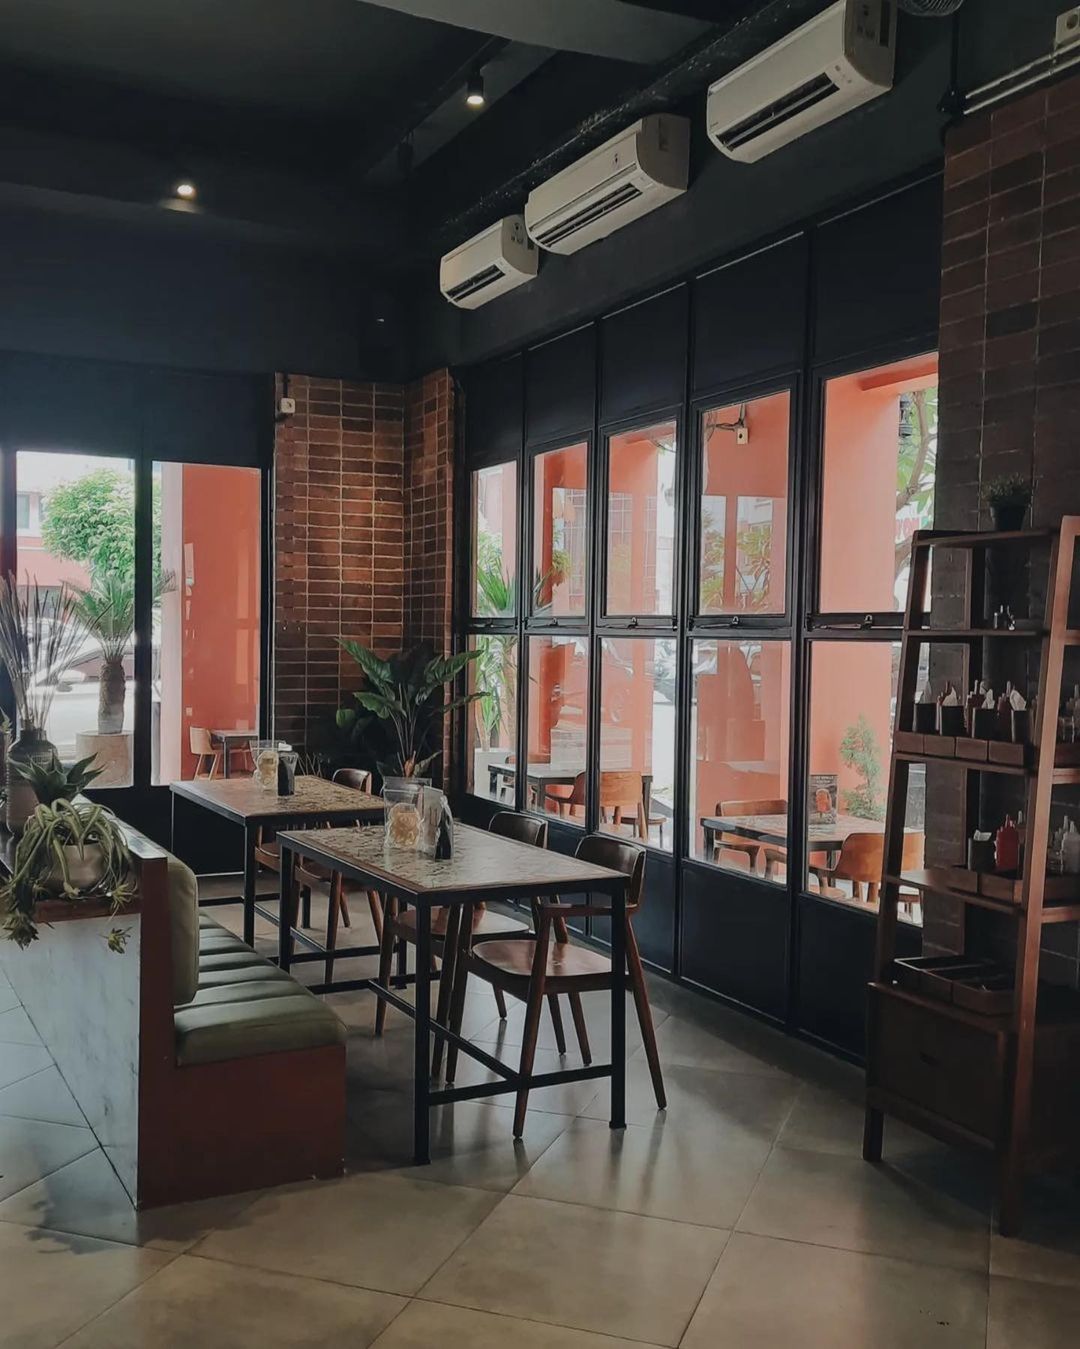 Restaurant Terbaru di Jakarta Yang Hits